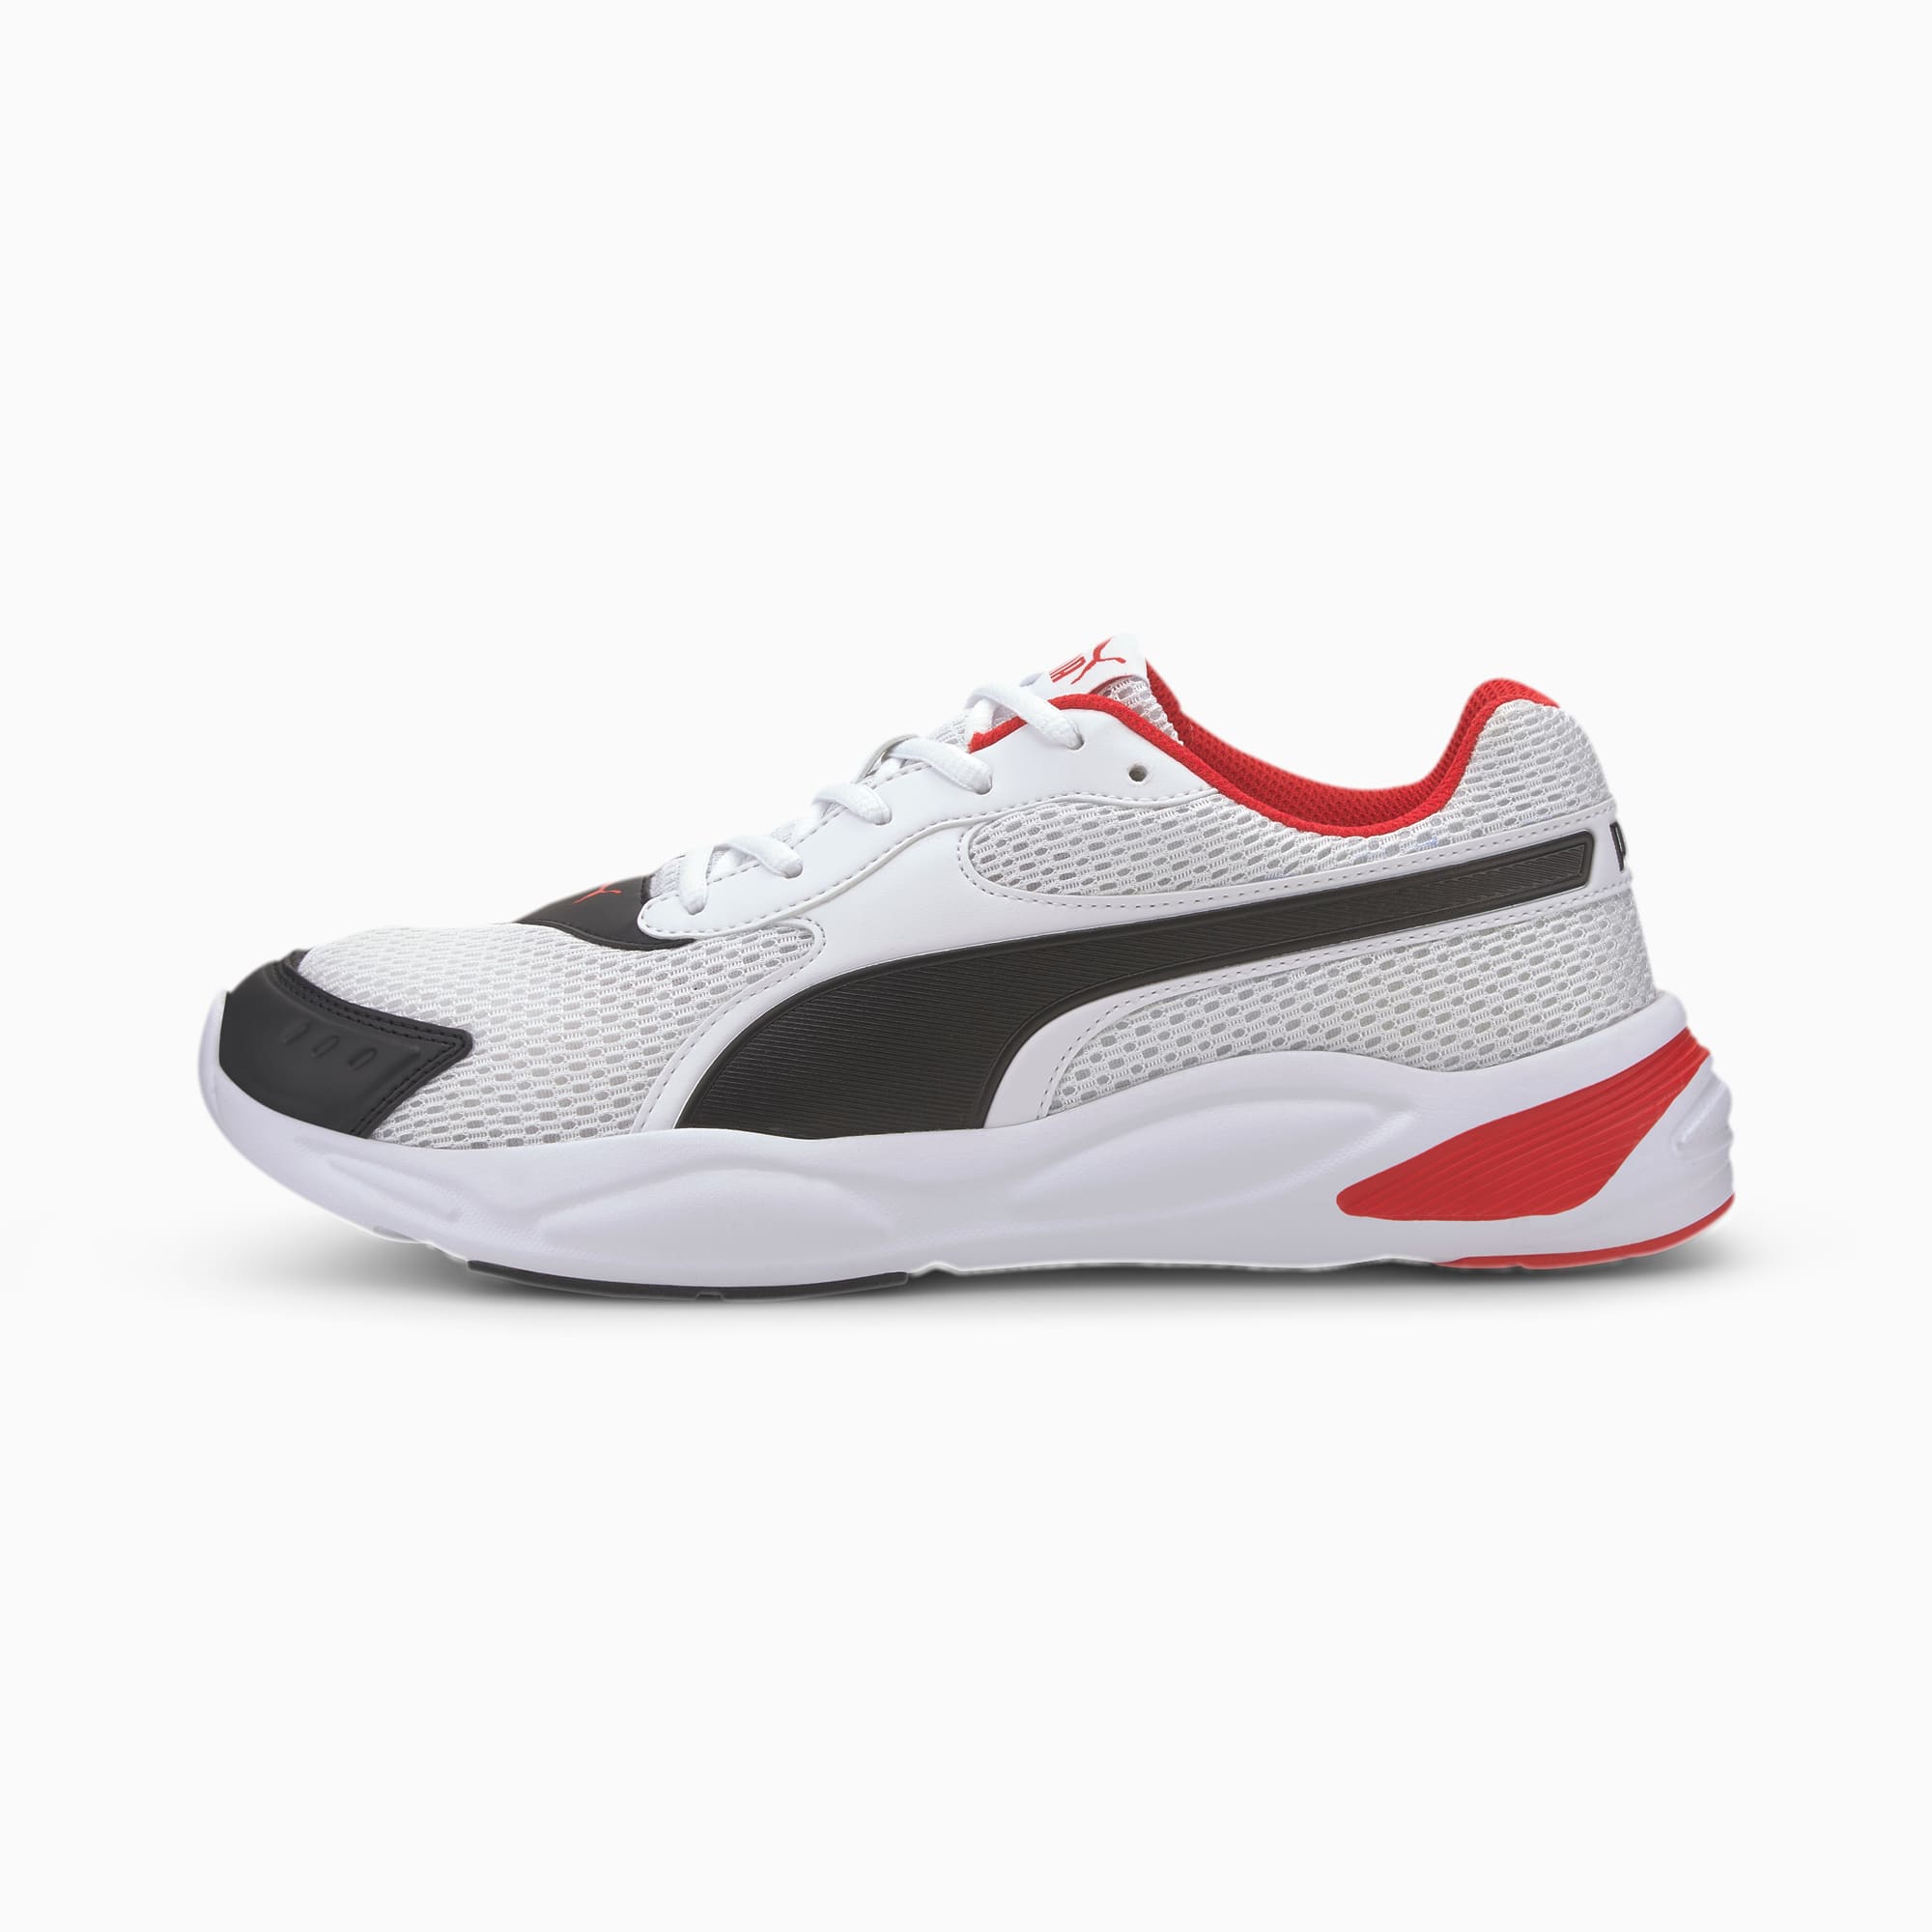 black red puma sneakers